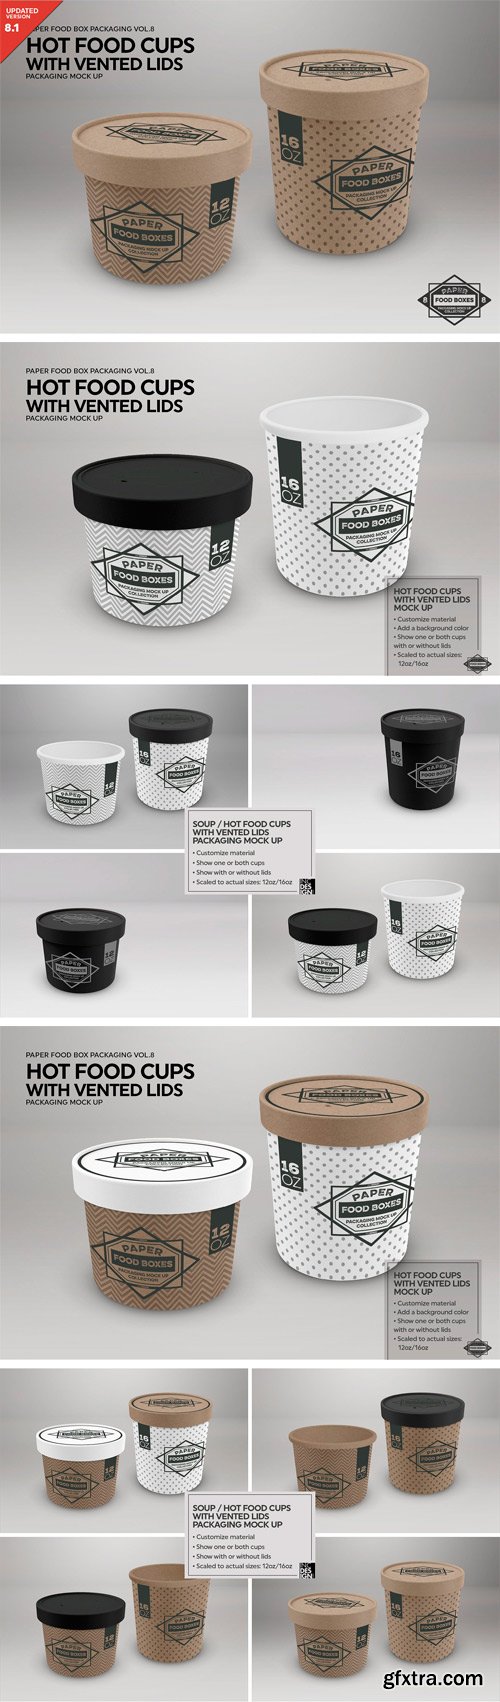 CM - Hot Food Cups w Vented Lids MockUp 2181805